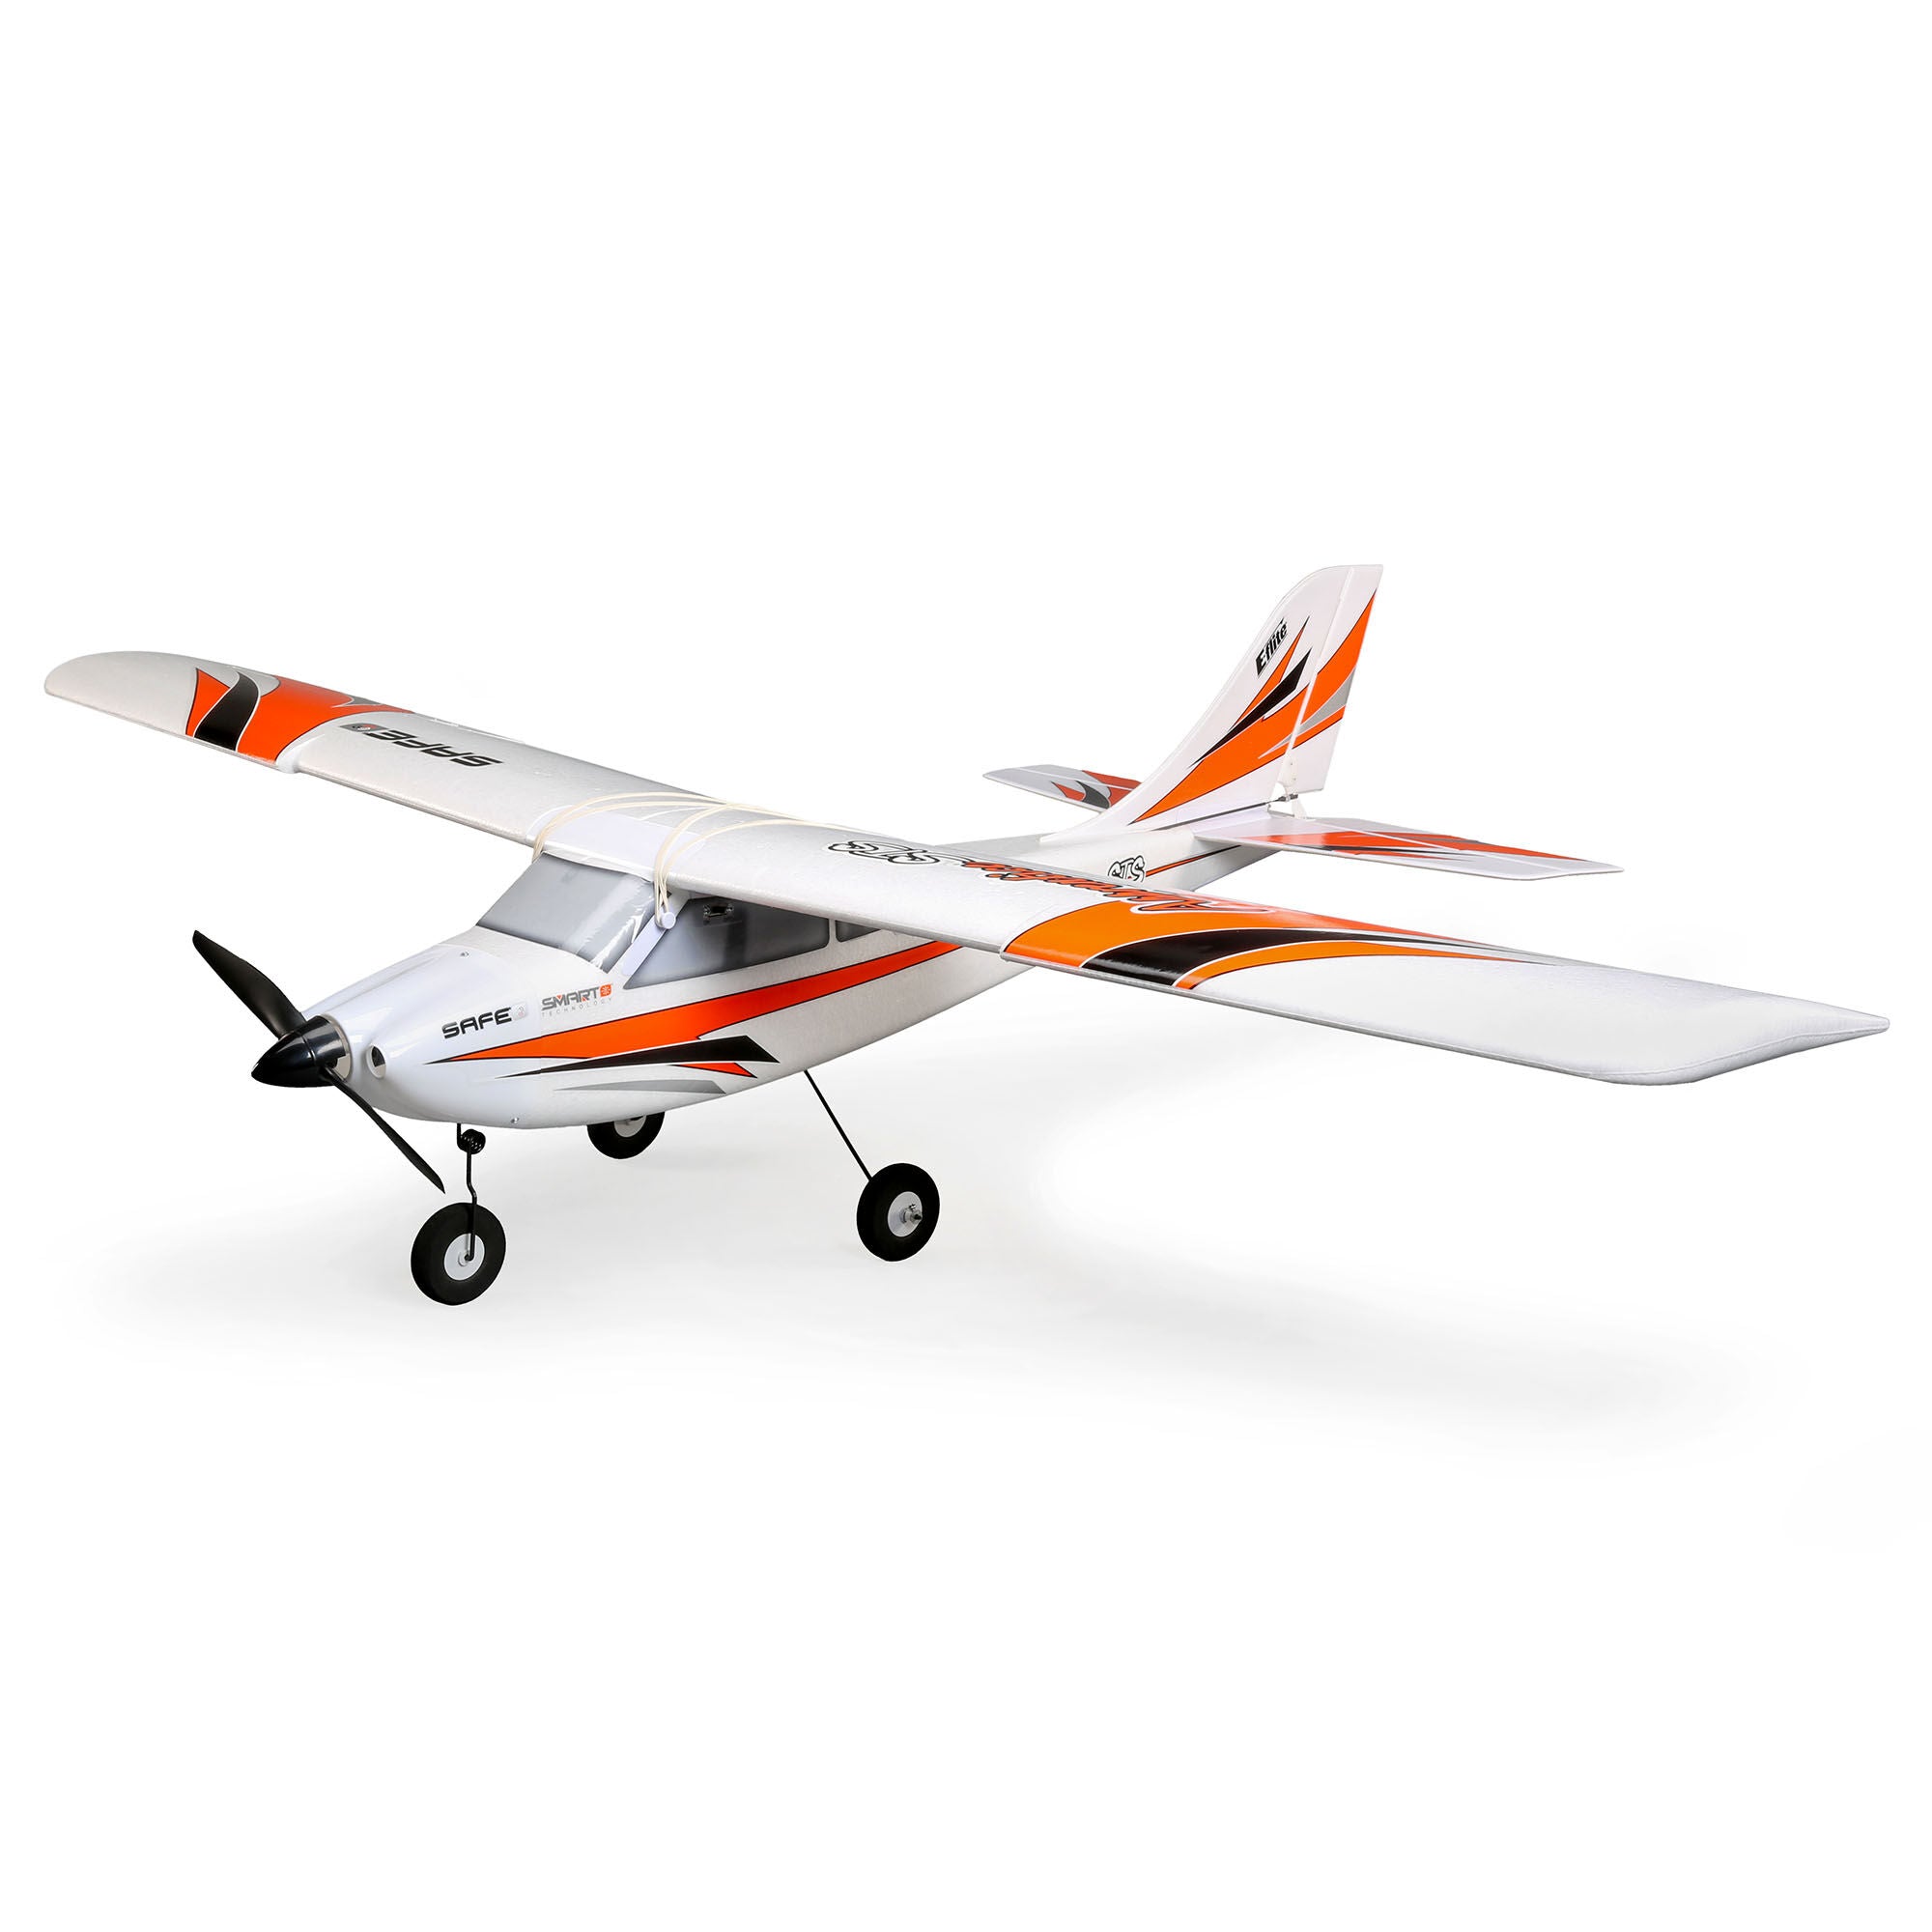 Foam Throwing Glider Landing Gear Kit, Rc Airplane Wheels Landing Gear